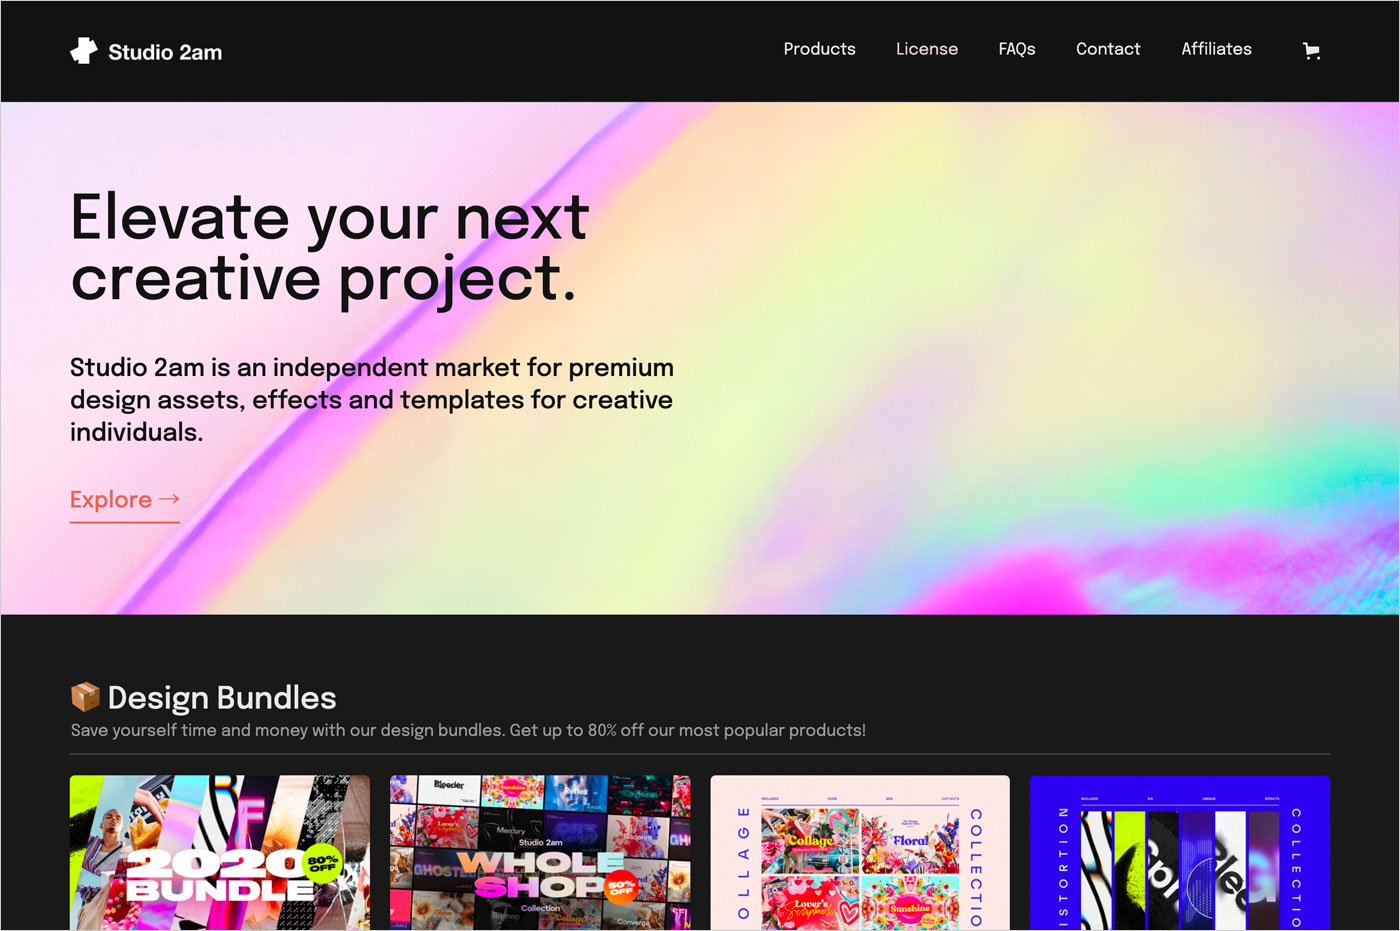 Studio 2am | Creative Assets, Effects, Templates, and Bundlesウェブサイトの画面キャプチャ画像